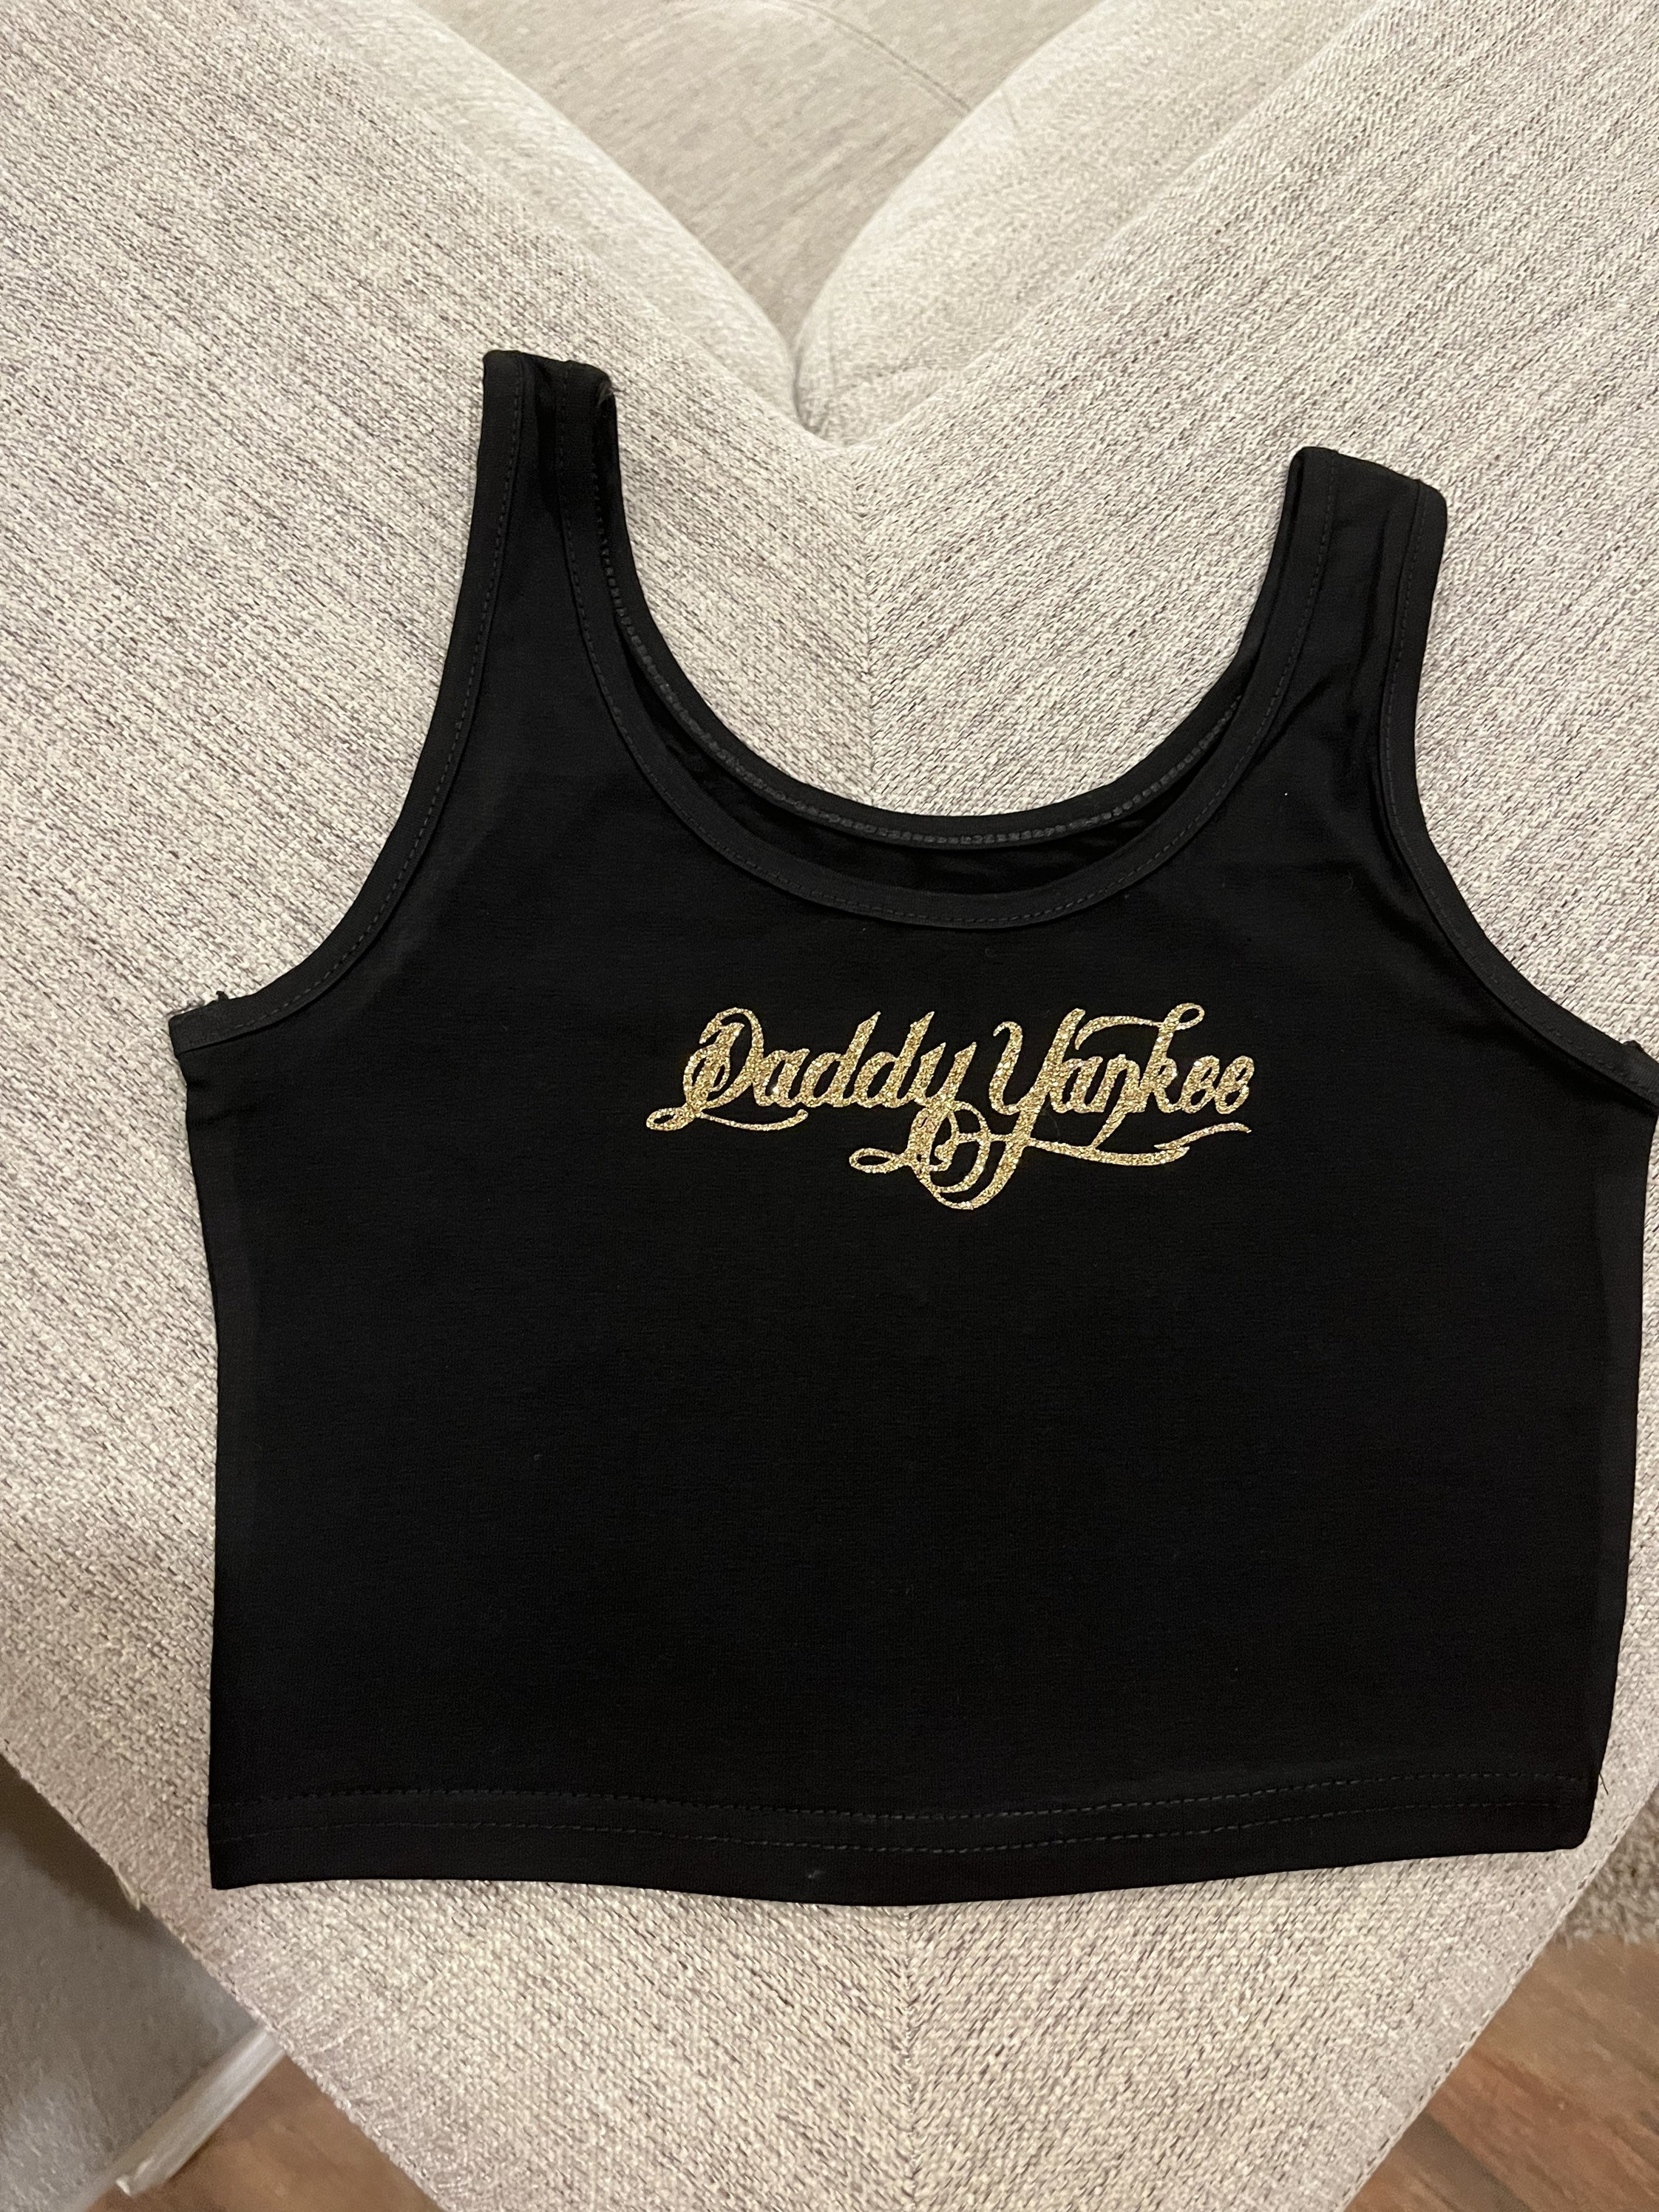 Daddy Yankee Crop Top, Streetwear, Legendaddy Tour, Daddy Yankee